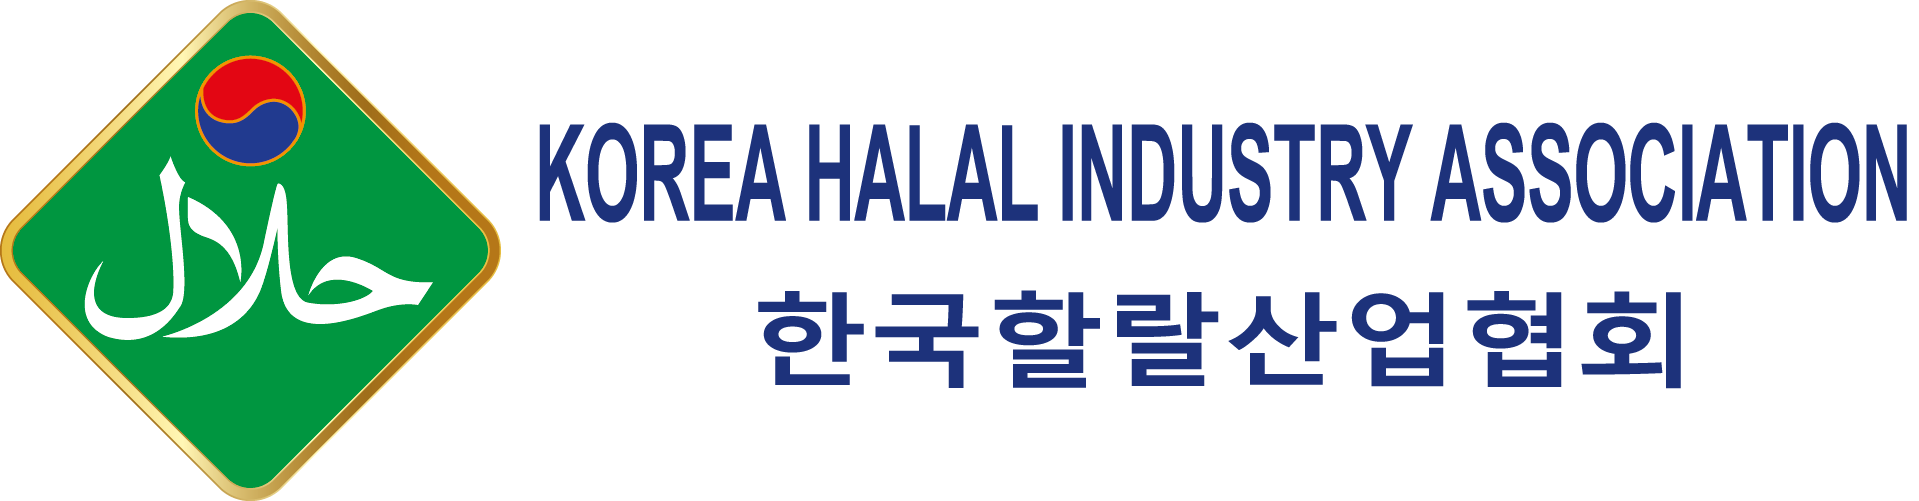 KOREA-HALAL-INDUSTRY-ASSOCIATION-6